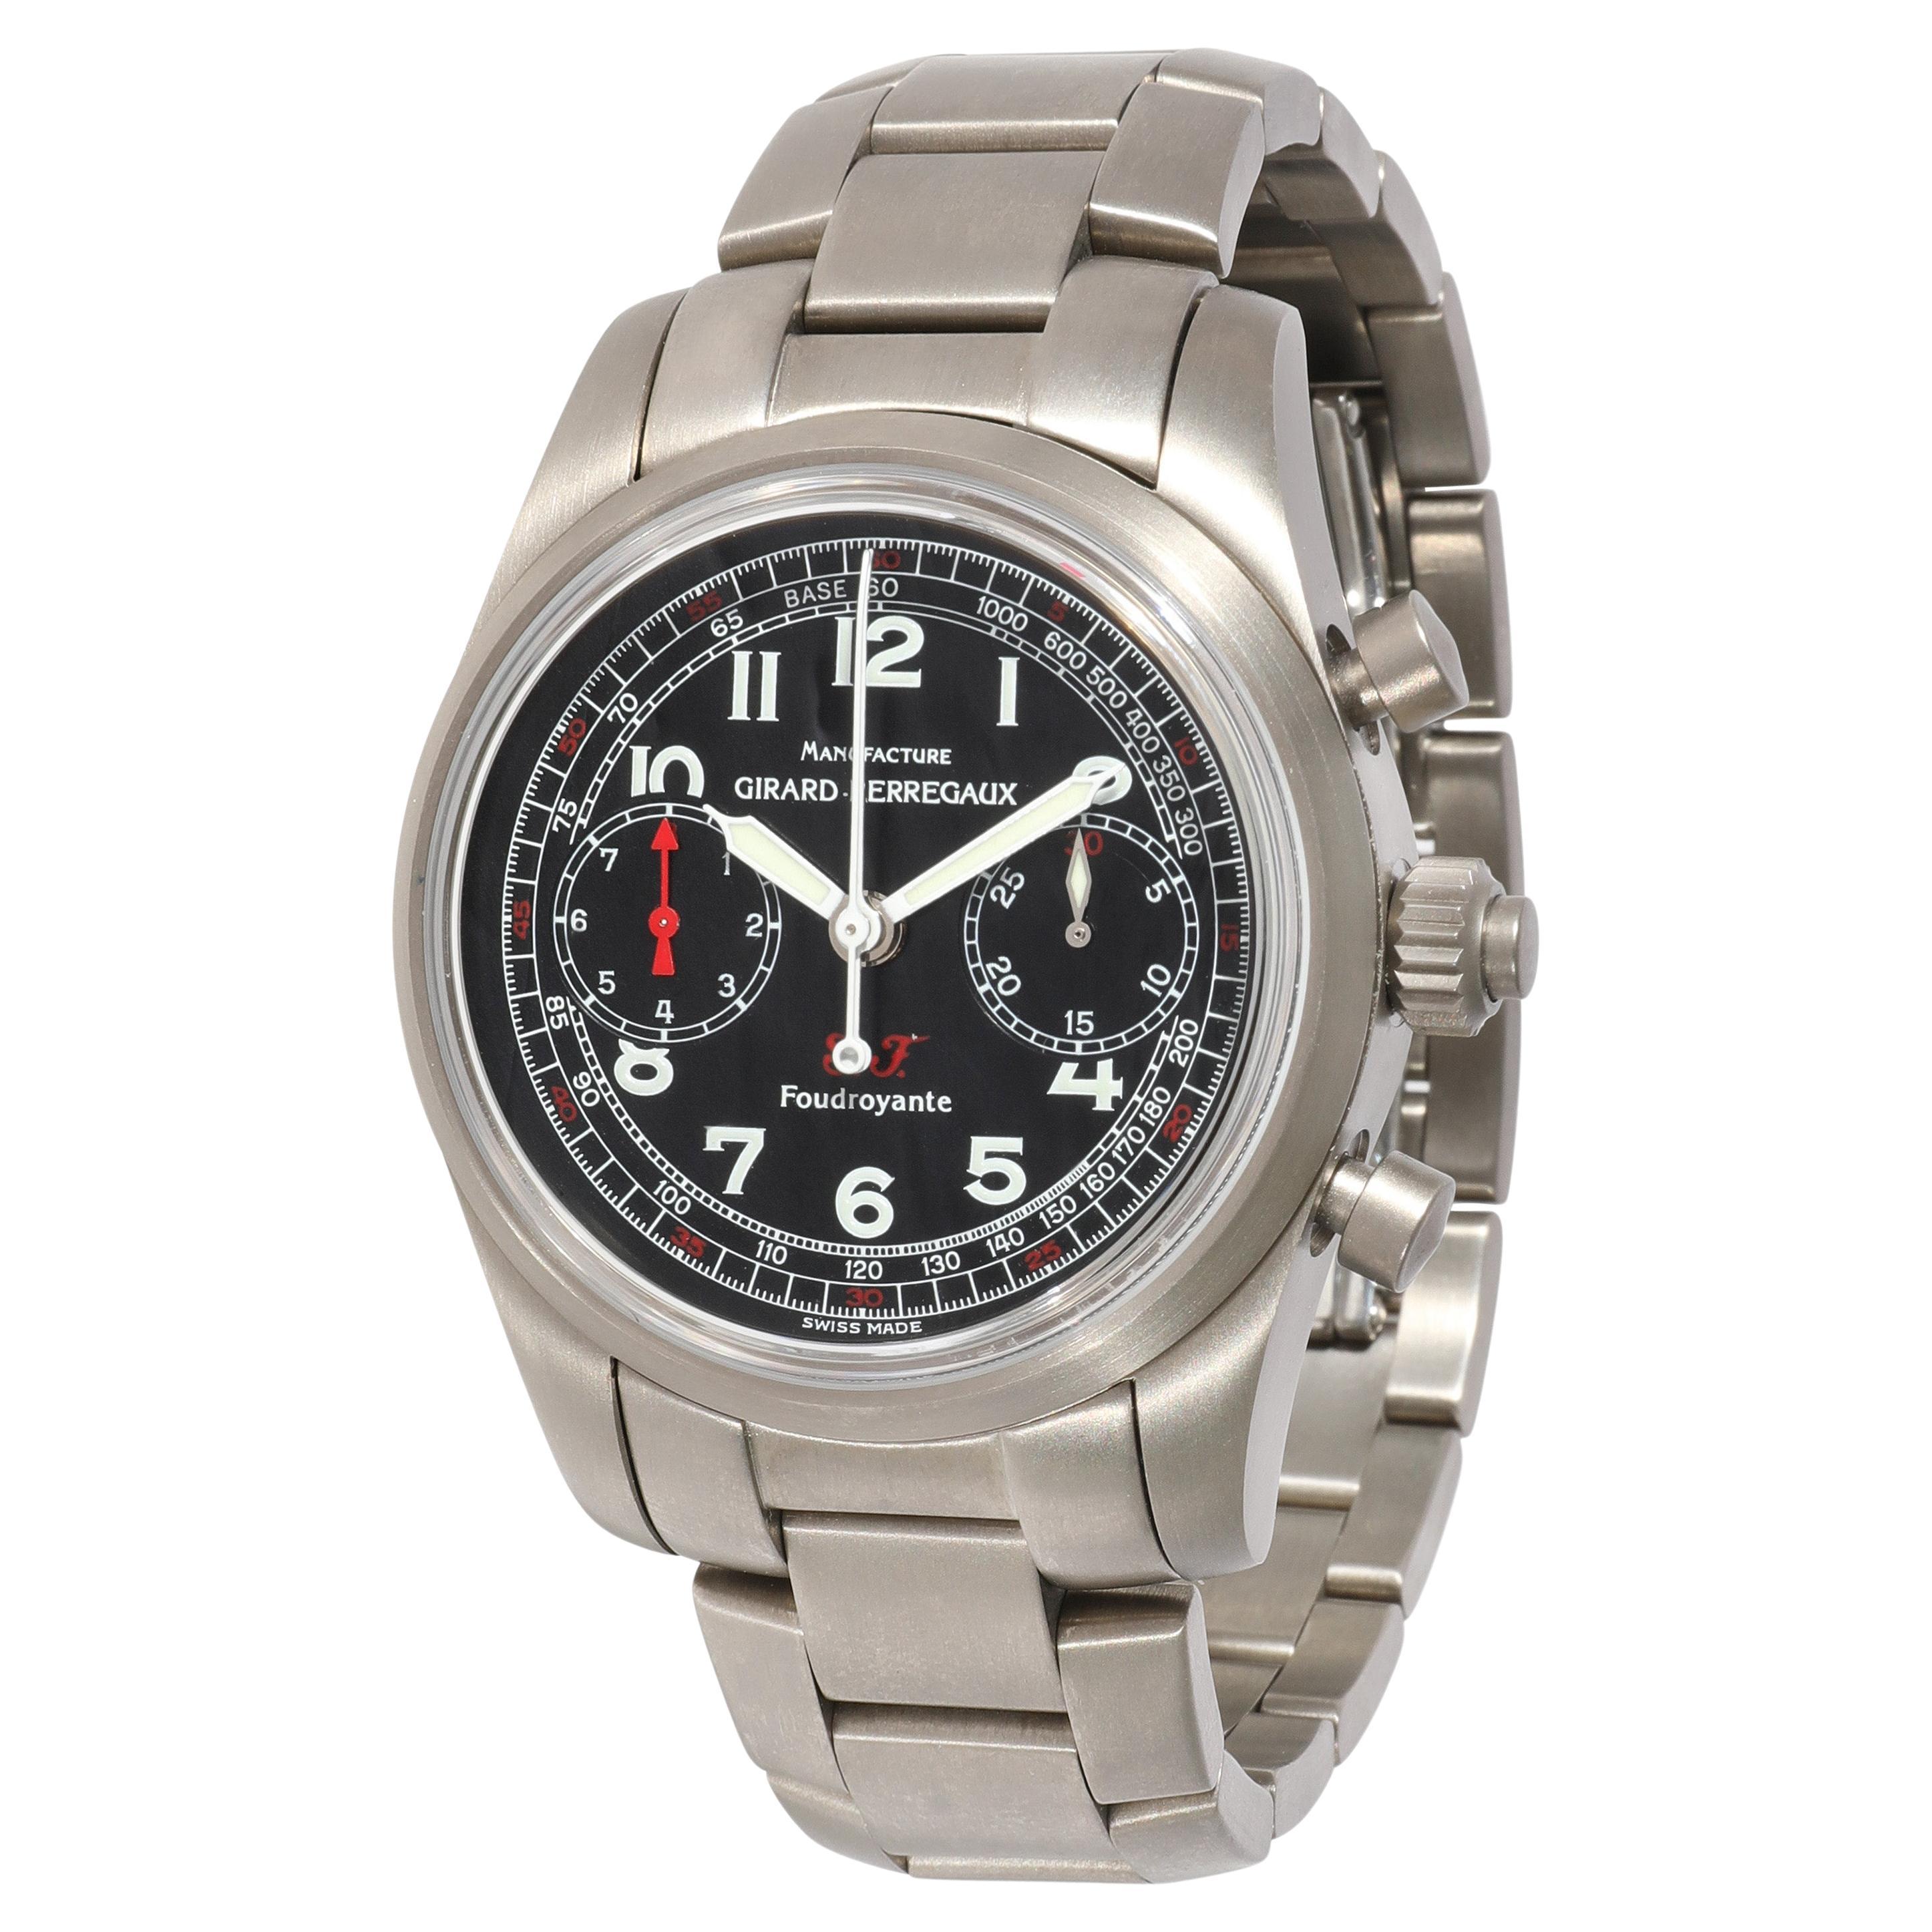 Girard Perregaux Ferrari Foudroyante 9020 Unisex Watch in Titanium For Sale